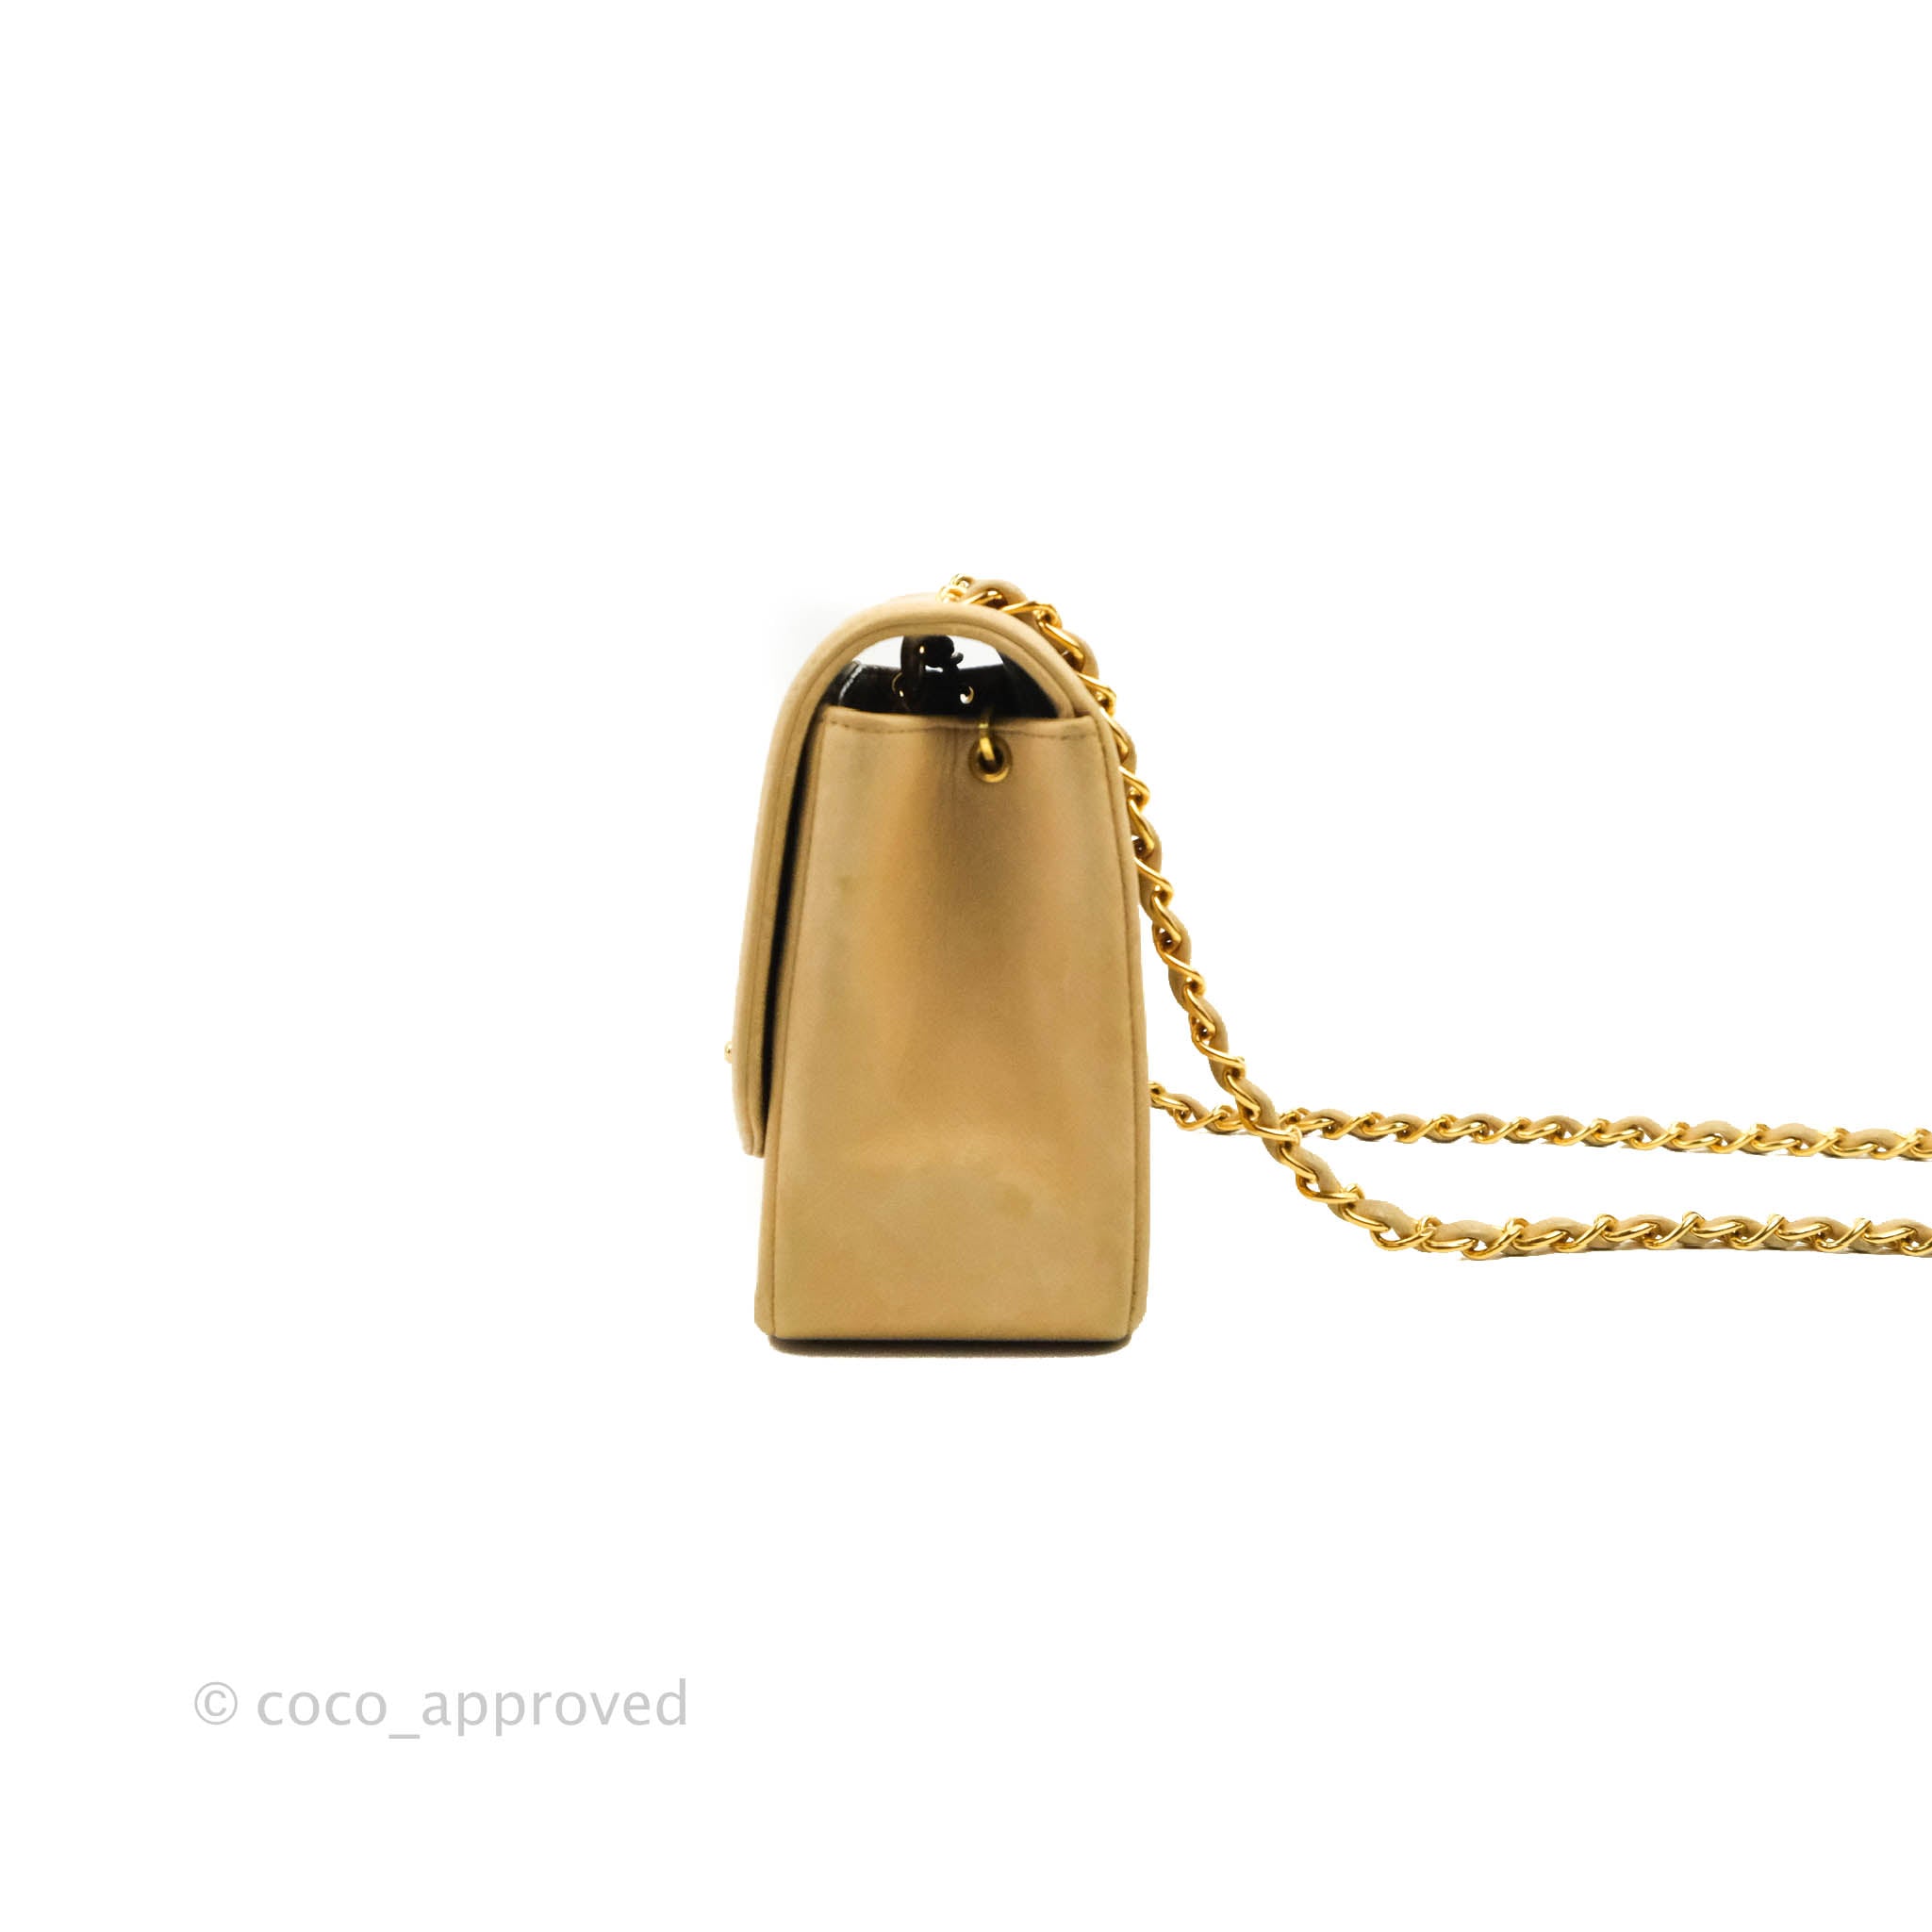 Chanel Diana Bags - 29 For Sale on 1stDibs  chanel diana medium, chanel  small diana bag, chanel diana small bag